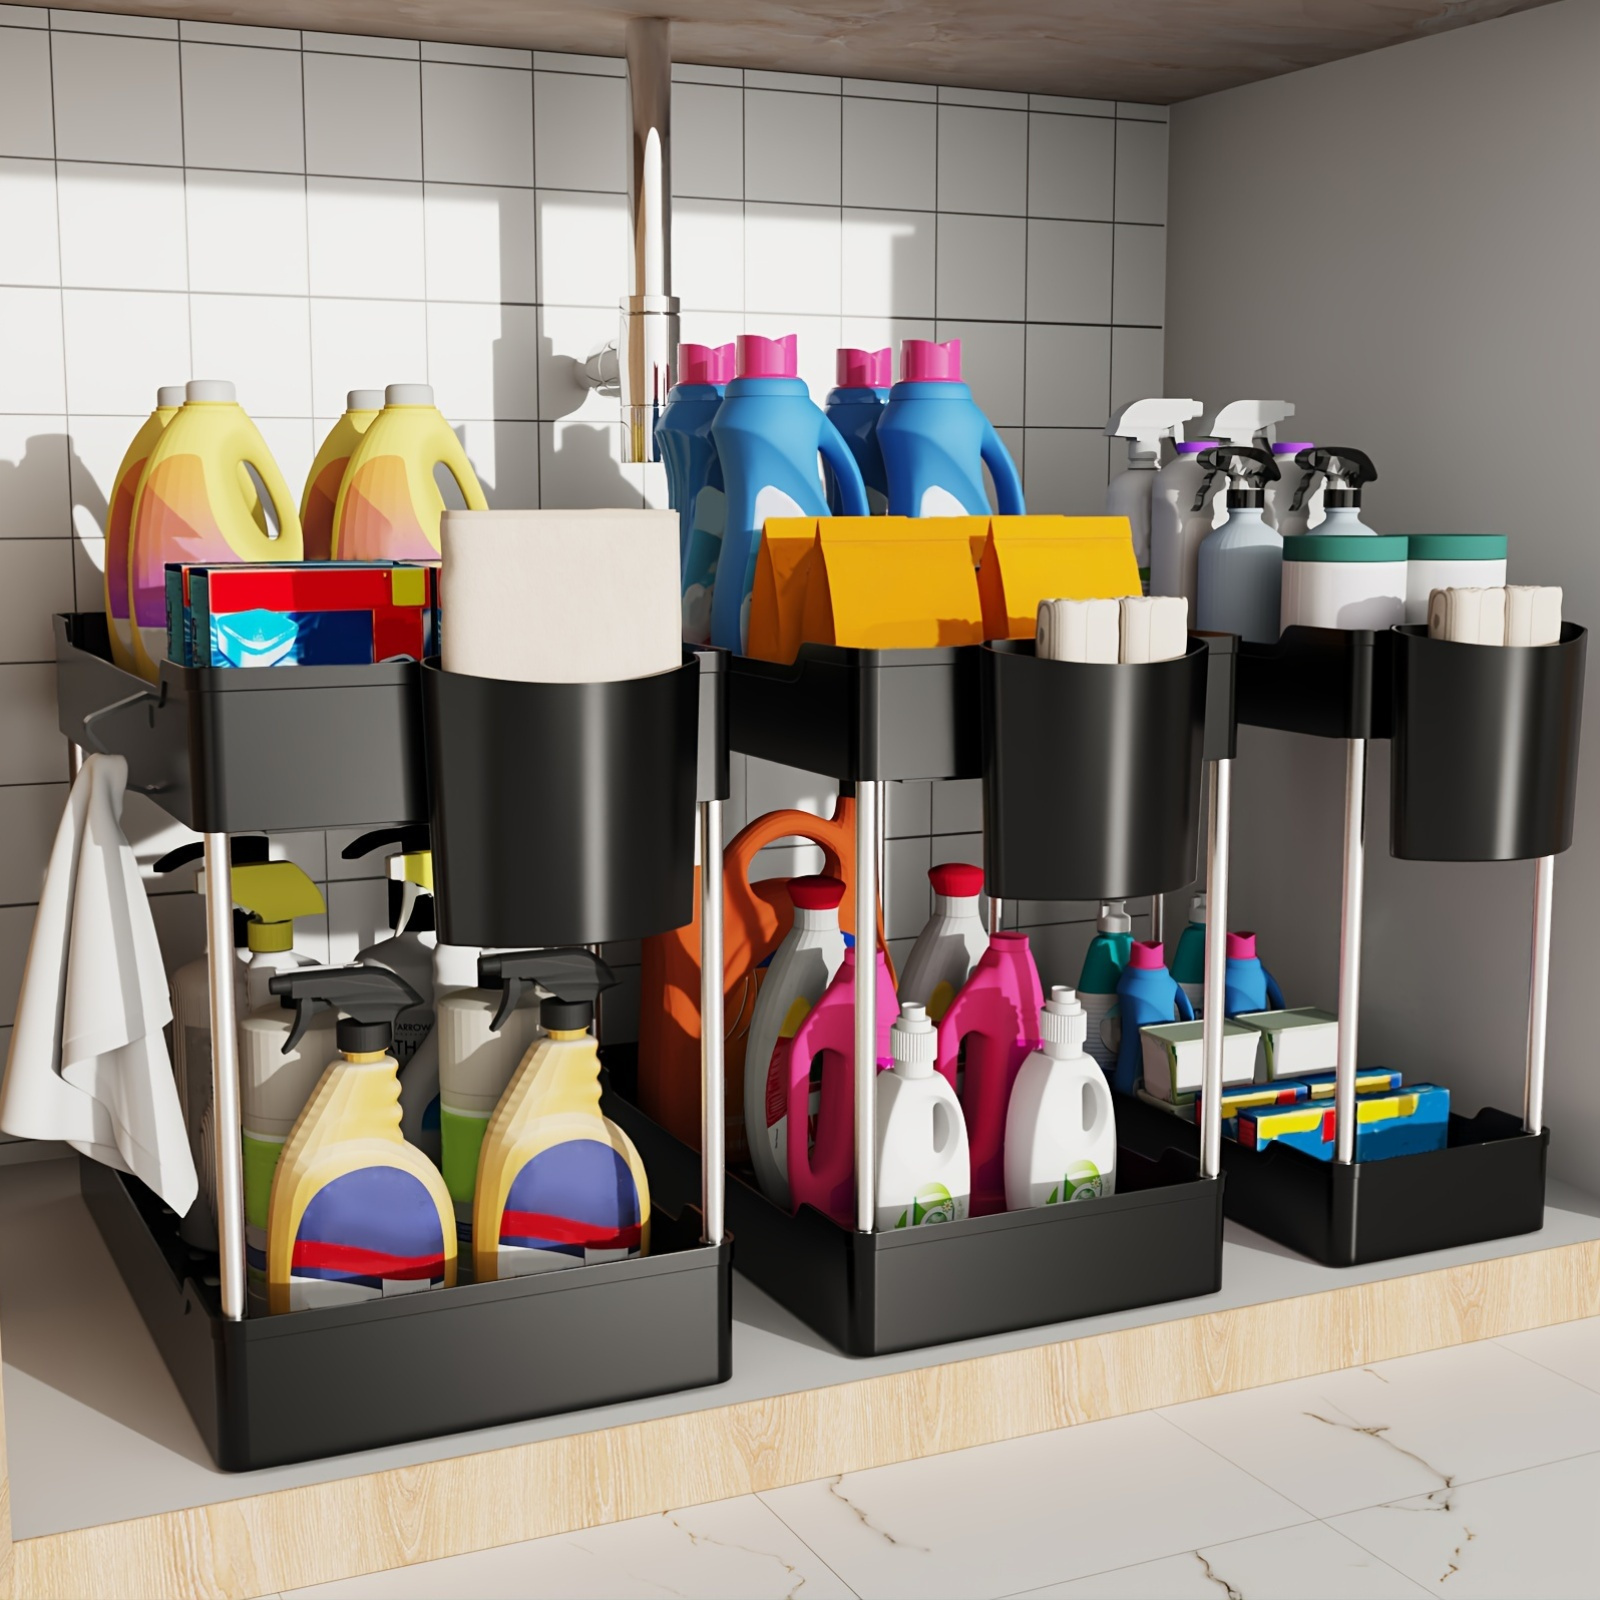 

3-pack Under Sink Organizer Set With Hooks - 2-tier Storage Bins For Kitchen & Bathroom, Space-saving Cabinet Shelves, Black Plastic